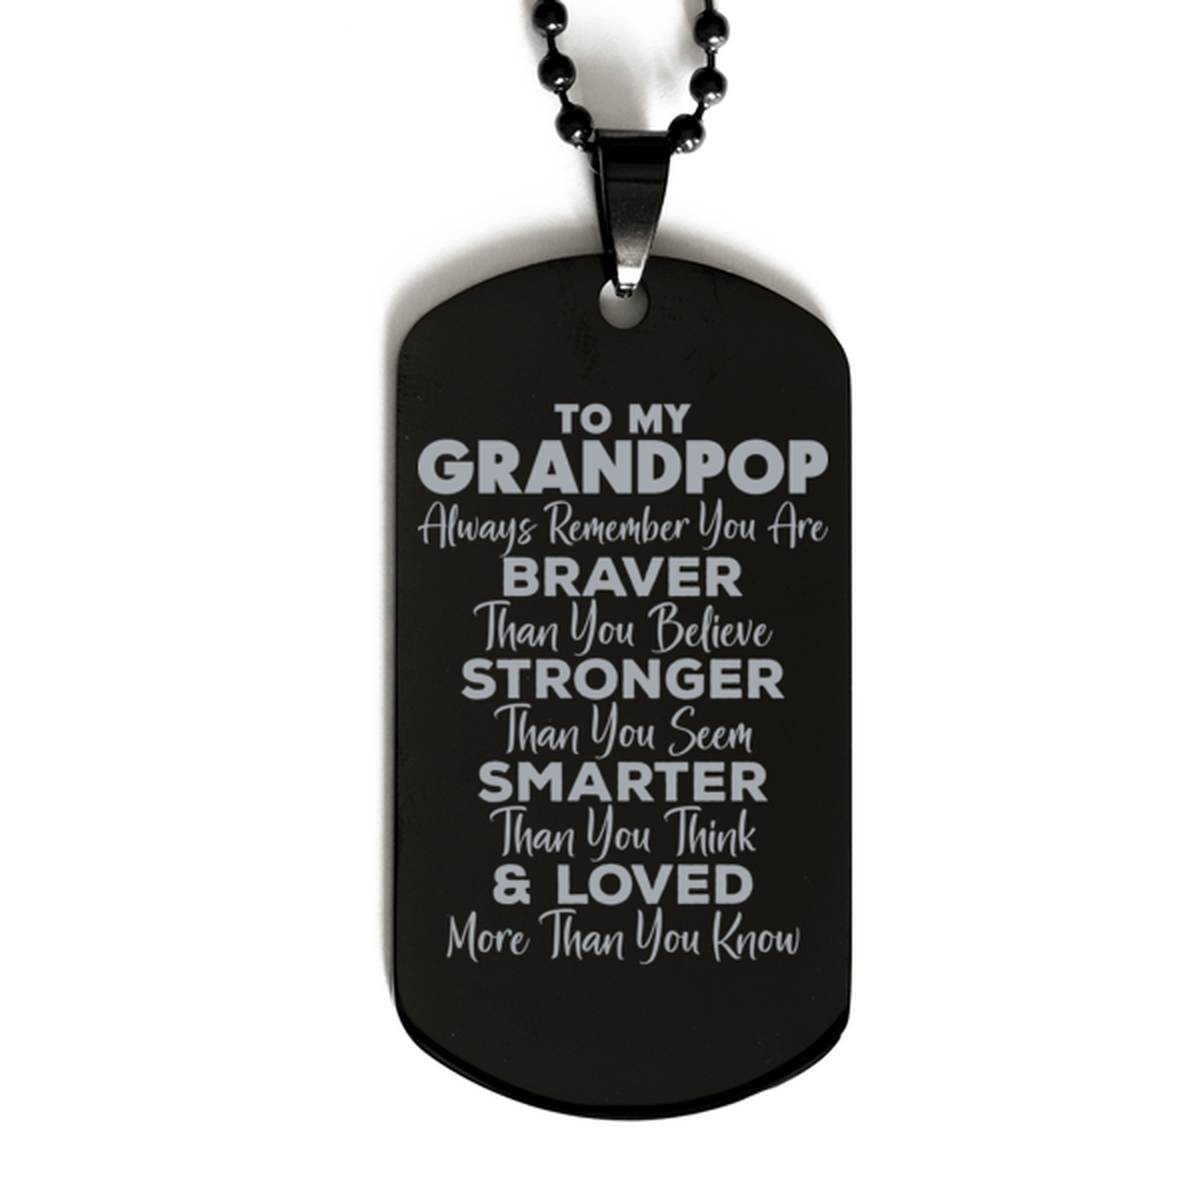 Motivational Grandpop Black Dog Tag Necklace, Grandpop Always Remember You Are Braver Than You Believe, Best Birthday Gifts for Grandpop